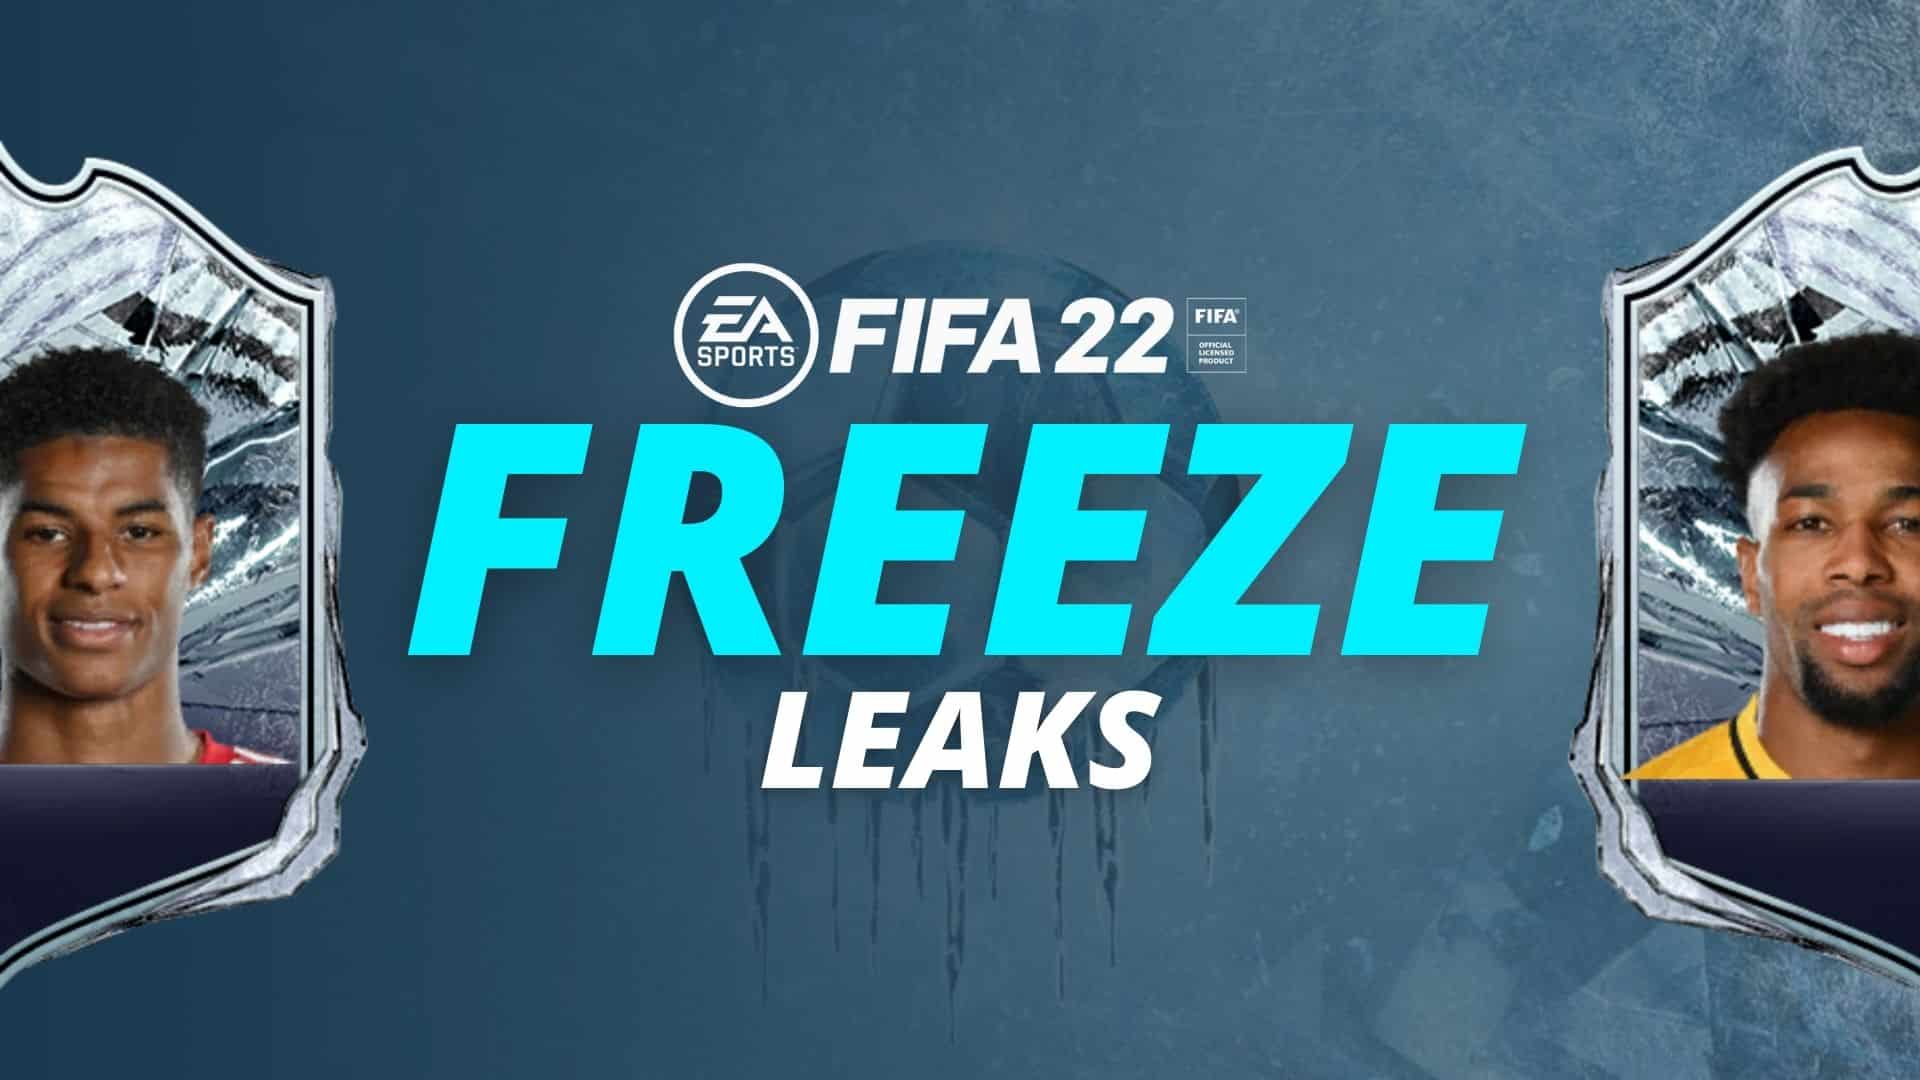 fifa 22 freeze promo with rashford and adama traore